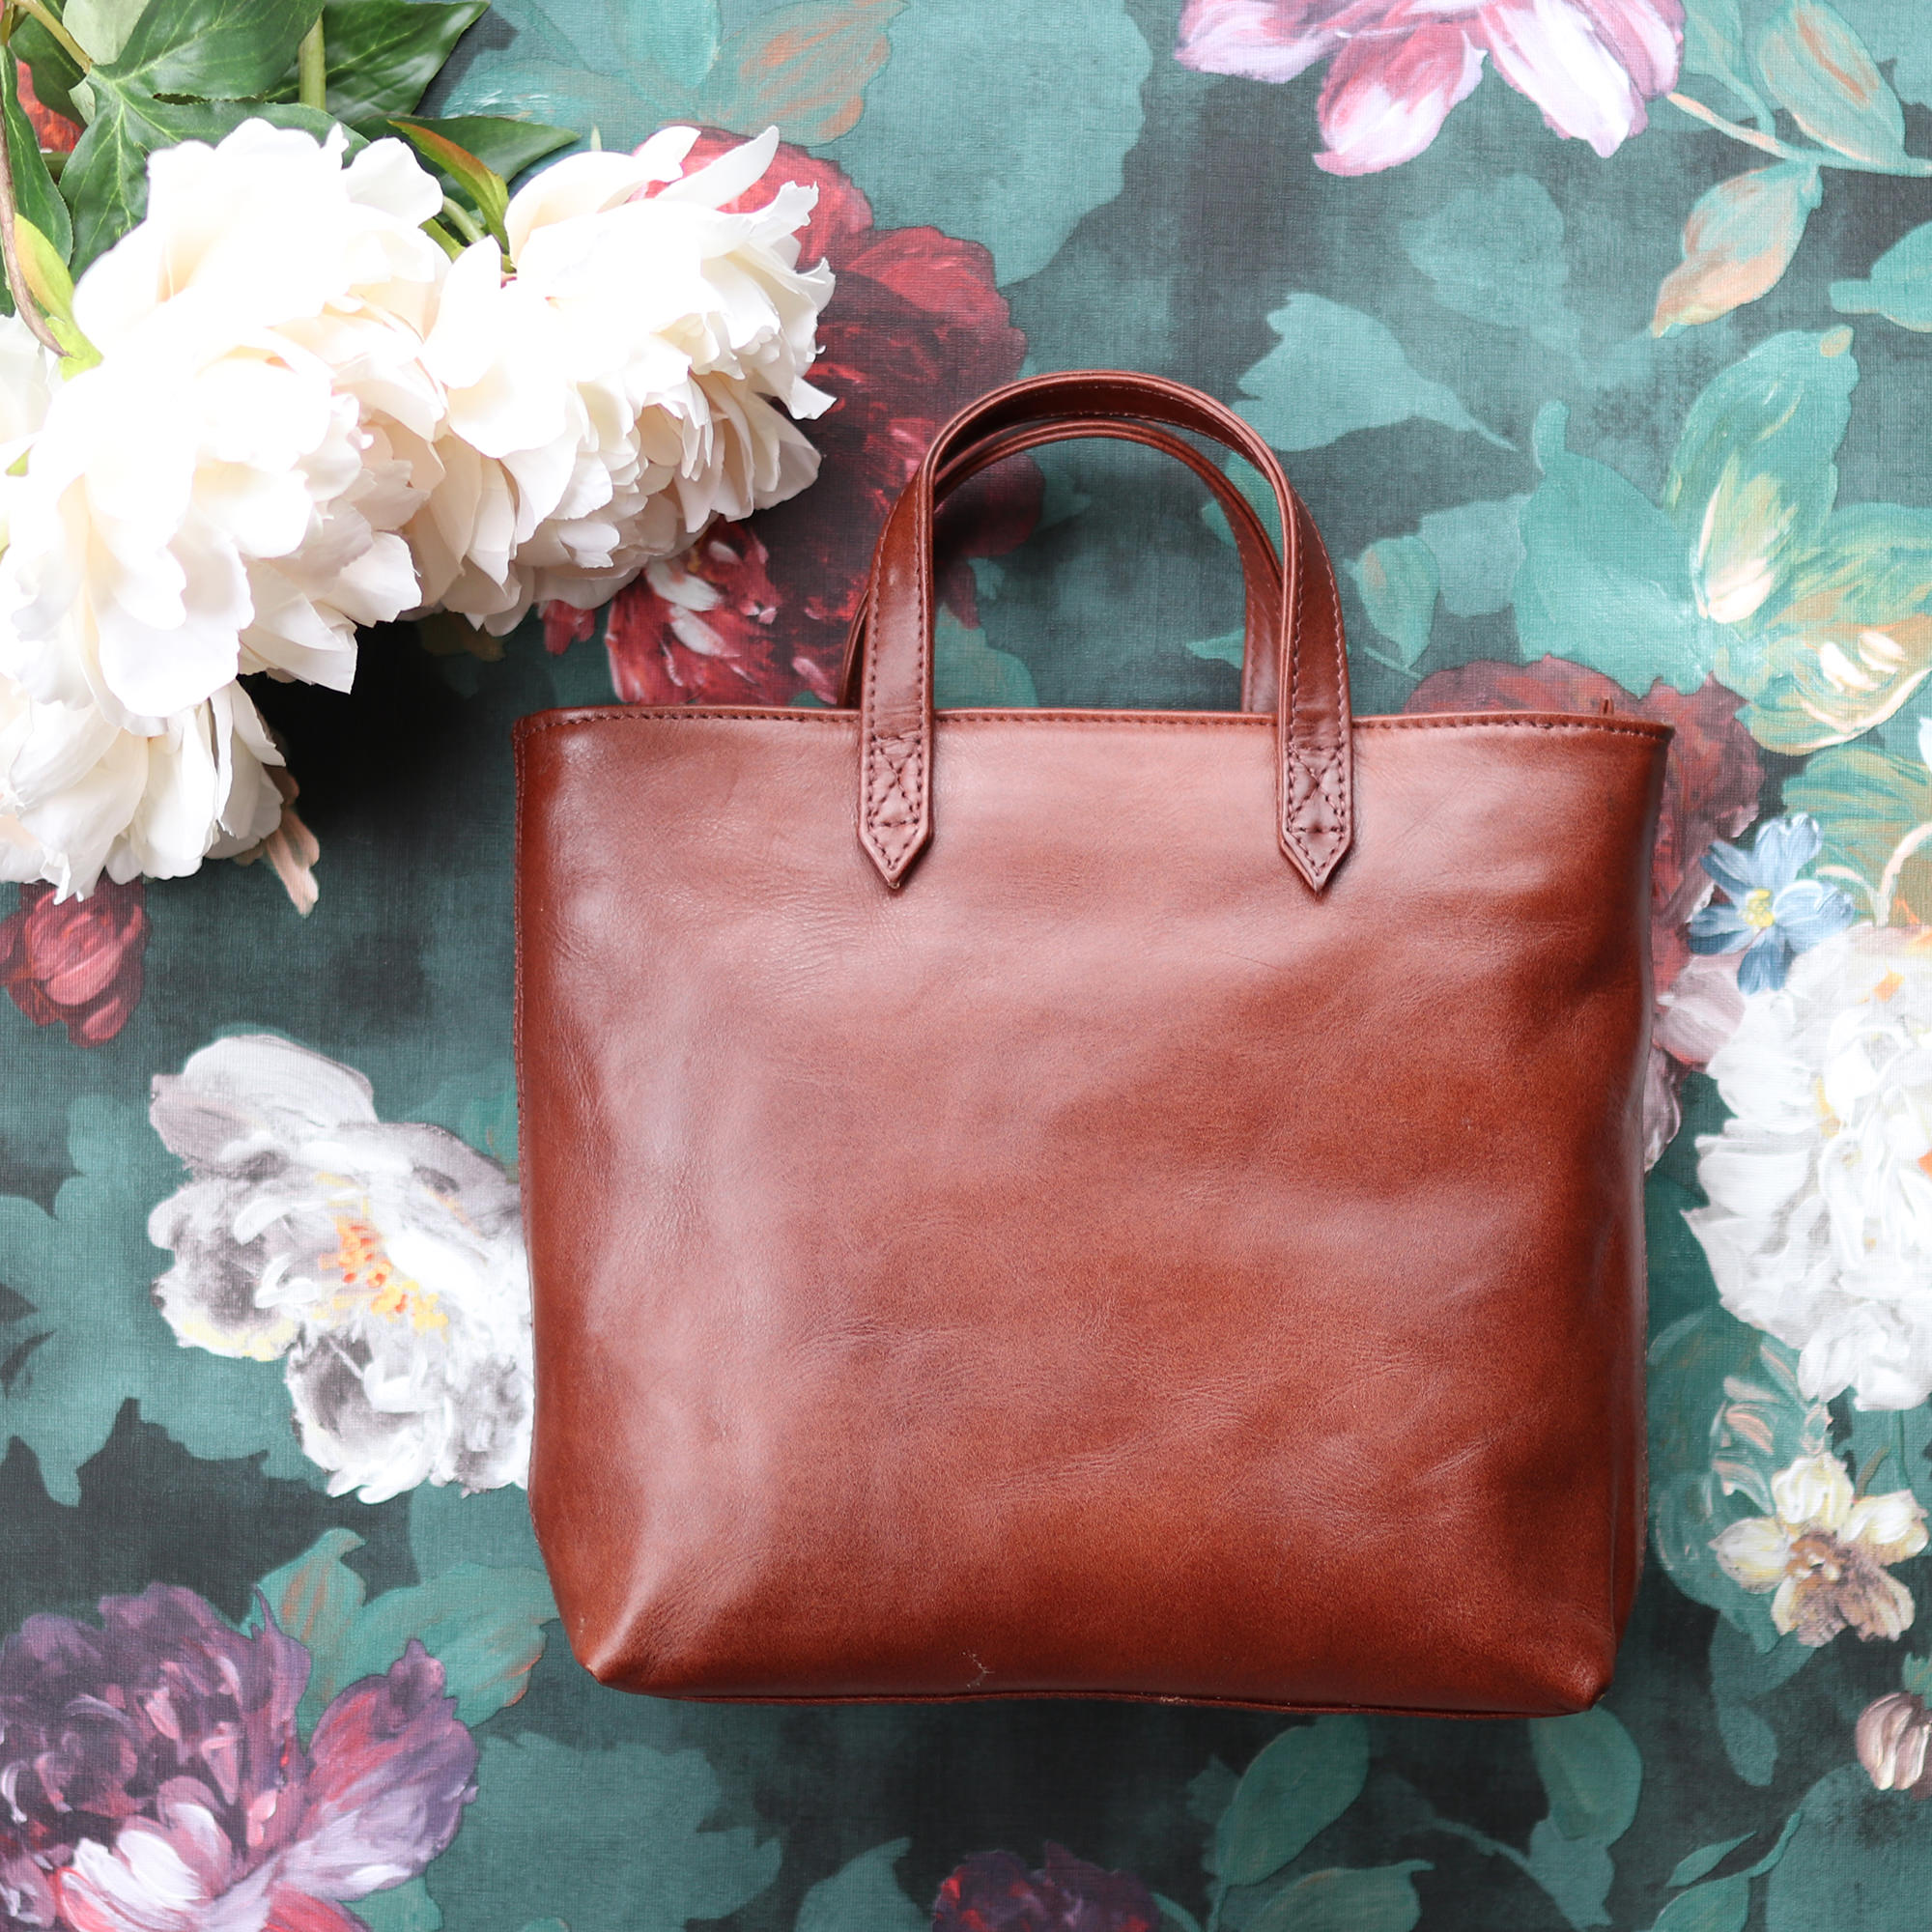 brown leather handbags uk